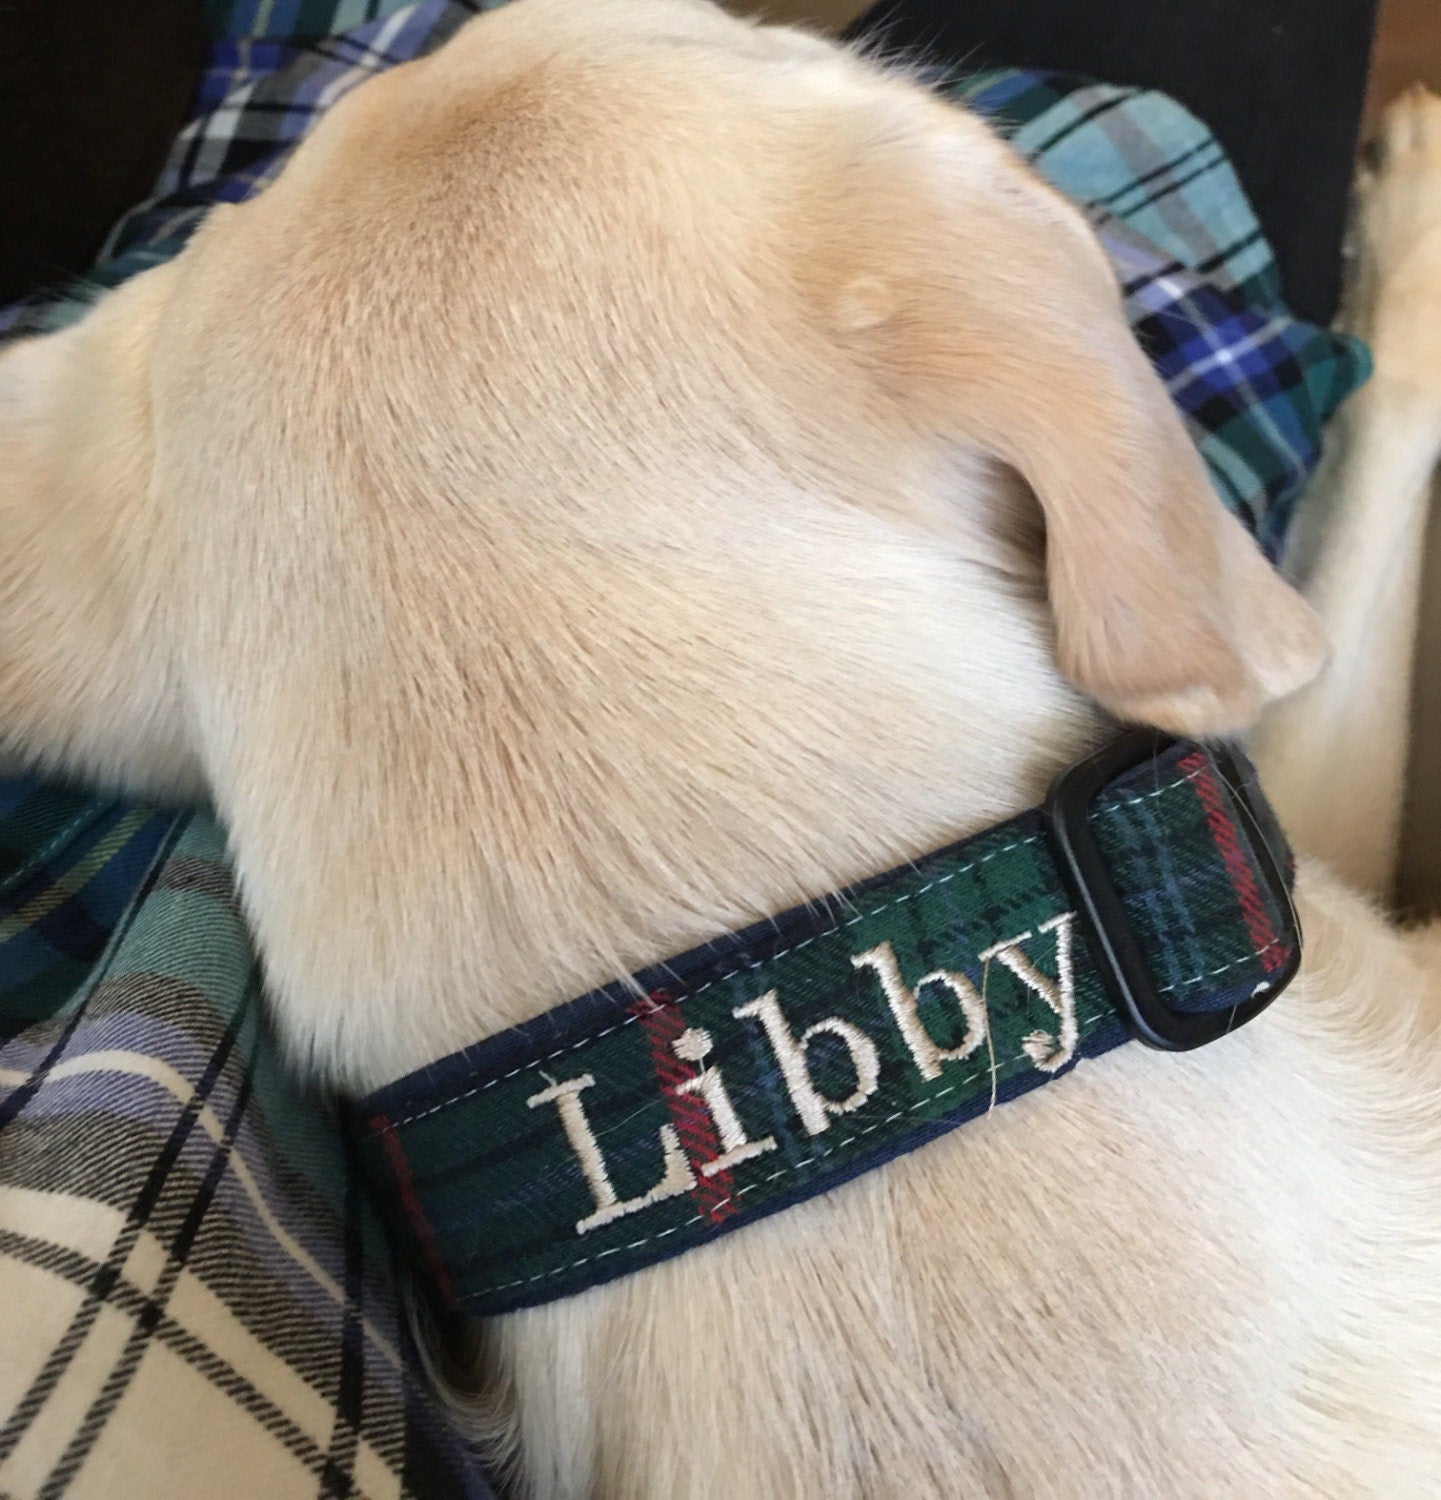 Monogrammed Dog Collar, personalized dog collar, monogrammed dog collar